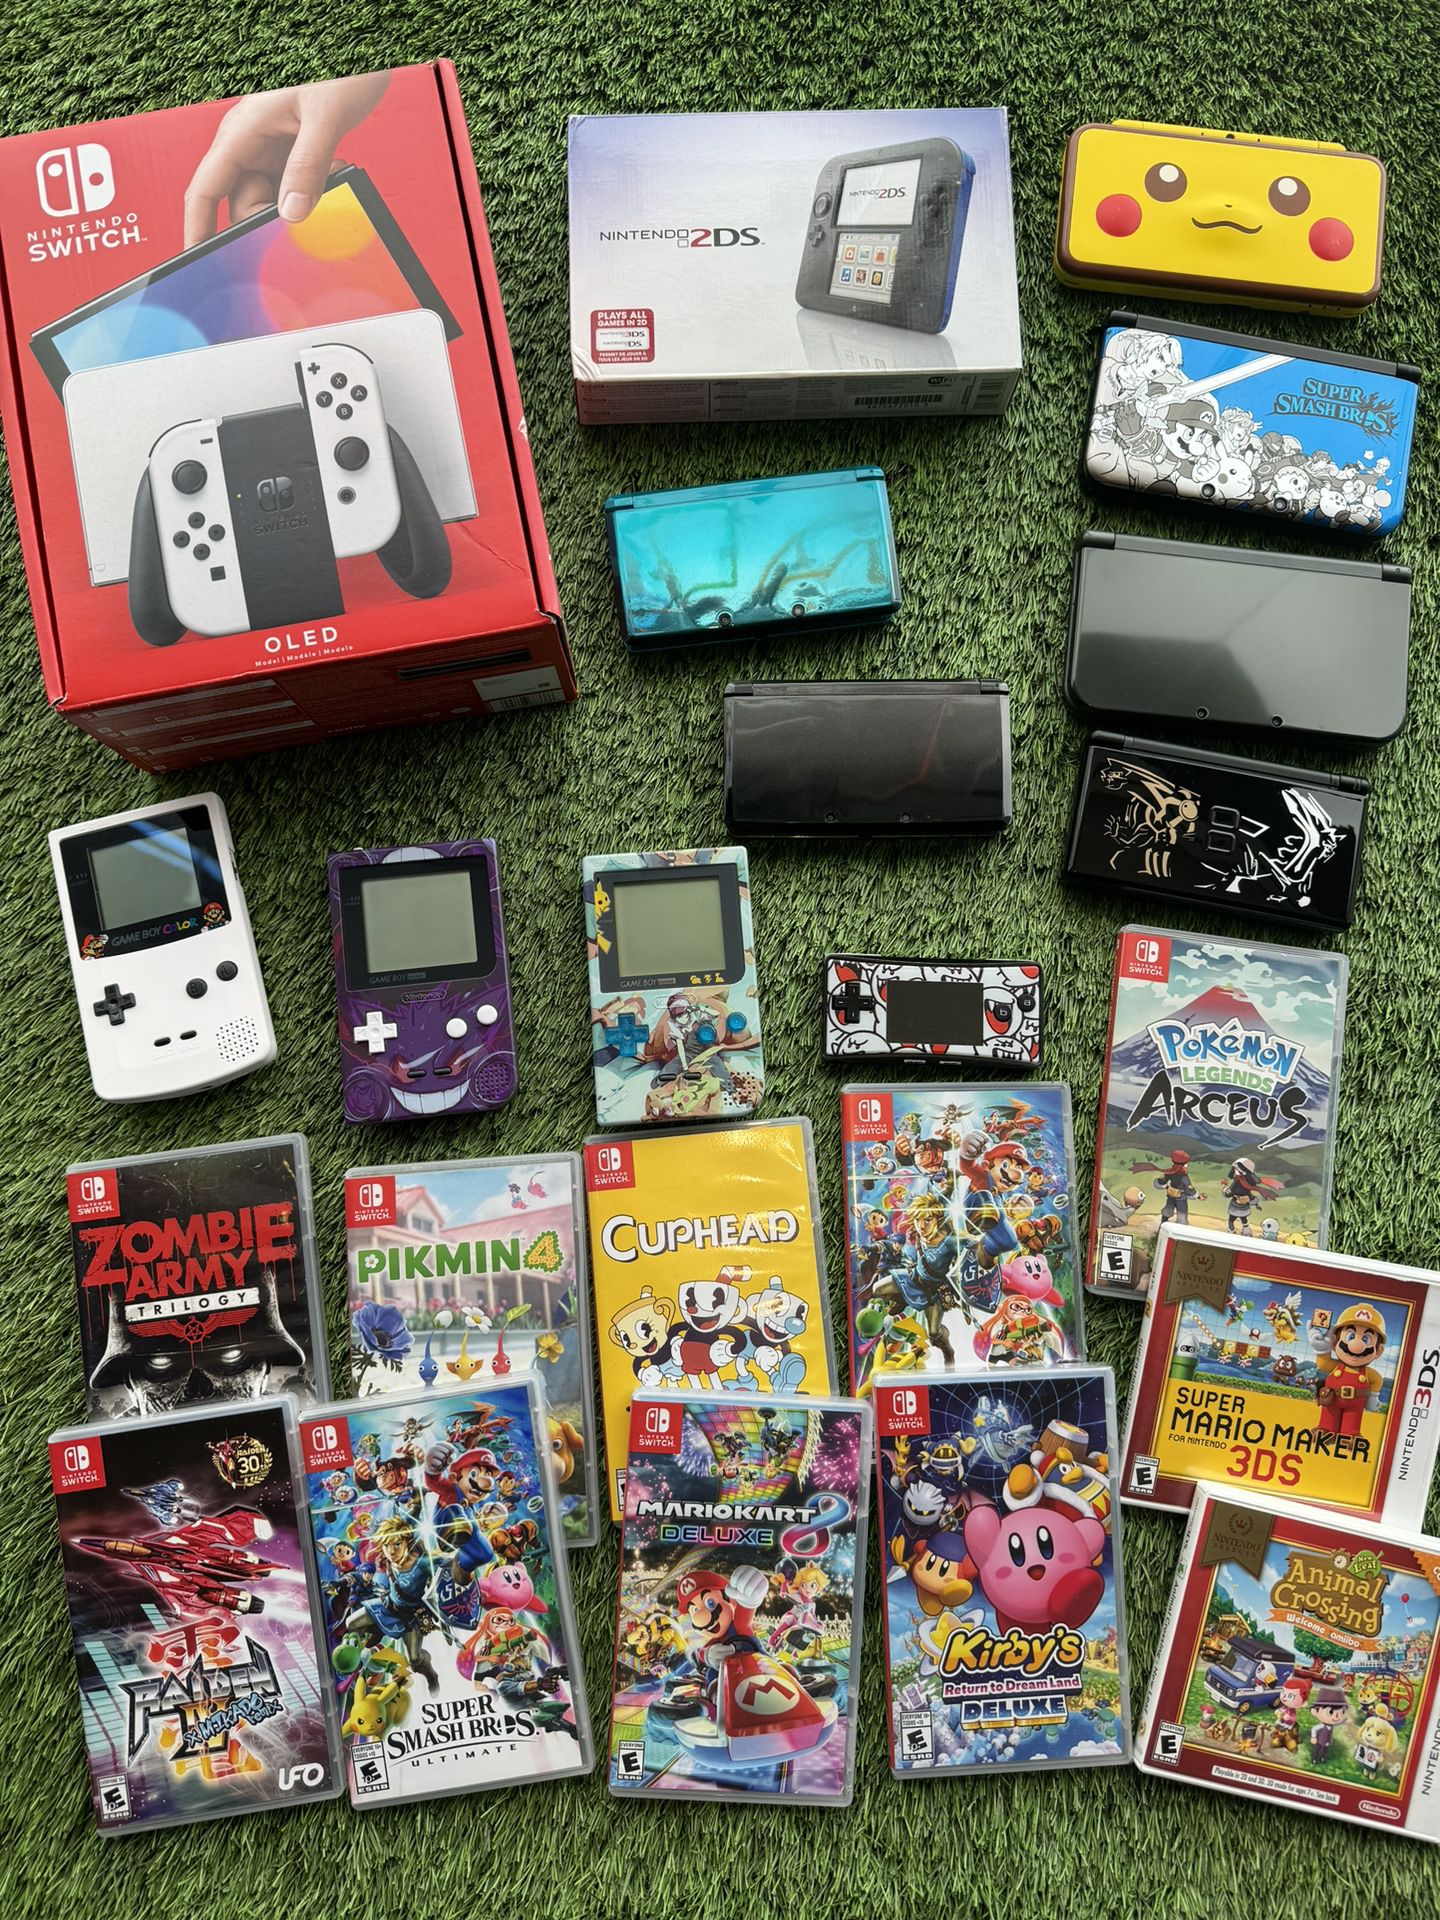 Nintendo Switch, Gameboy, Gameboy Pocket, Nintendo 3DS, Pokemon, Super Smash Bros, Cuphead